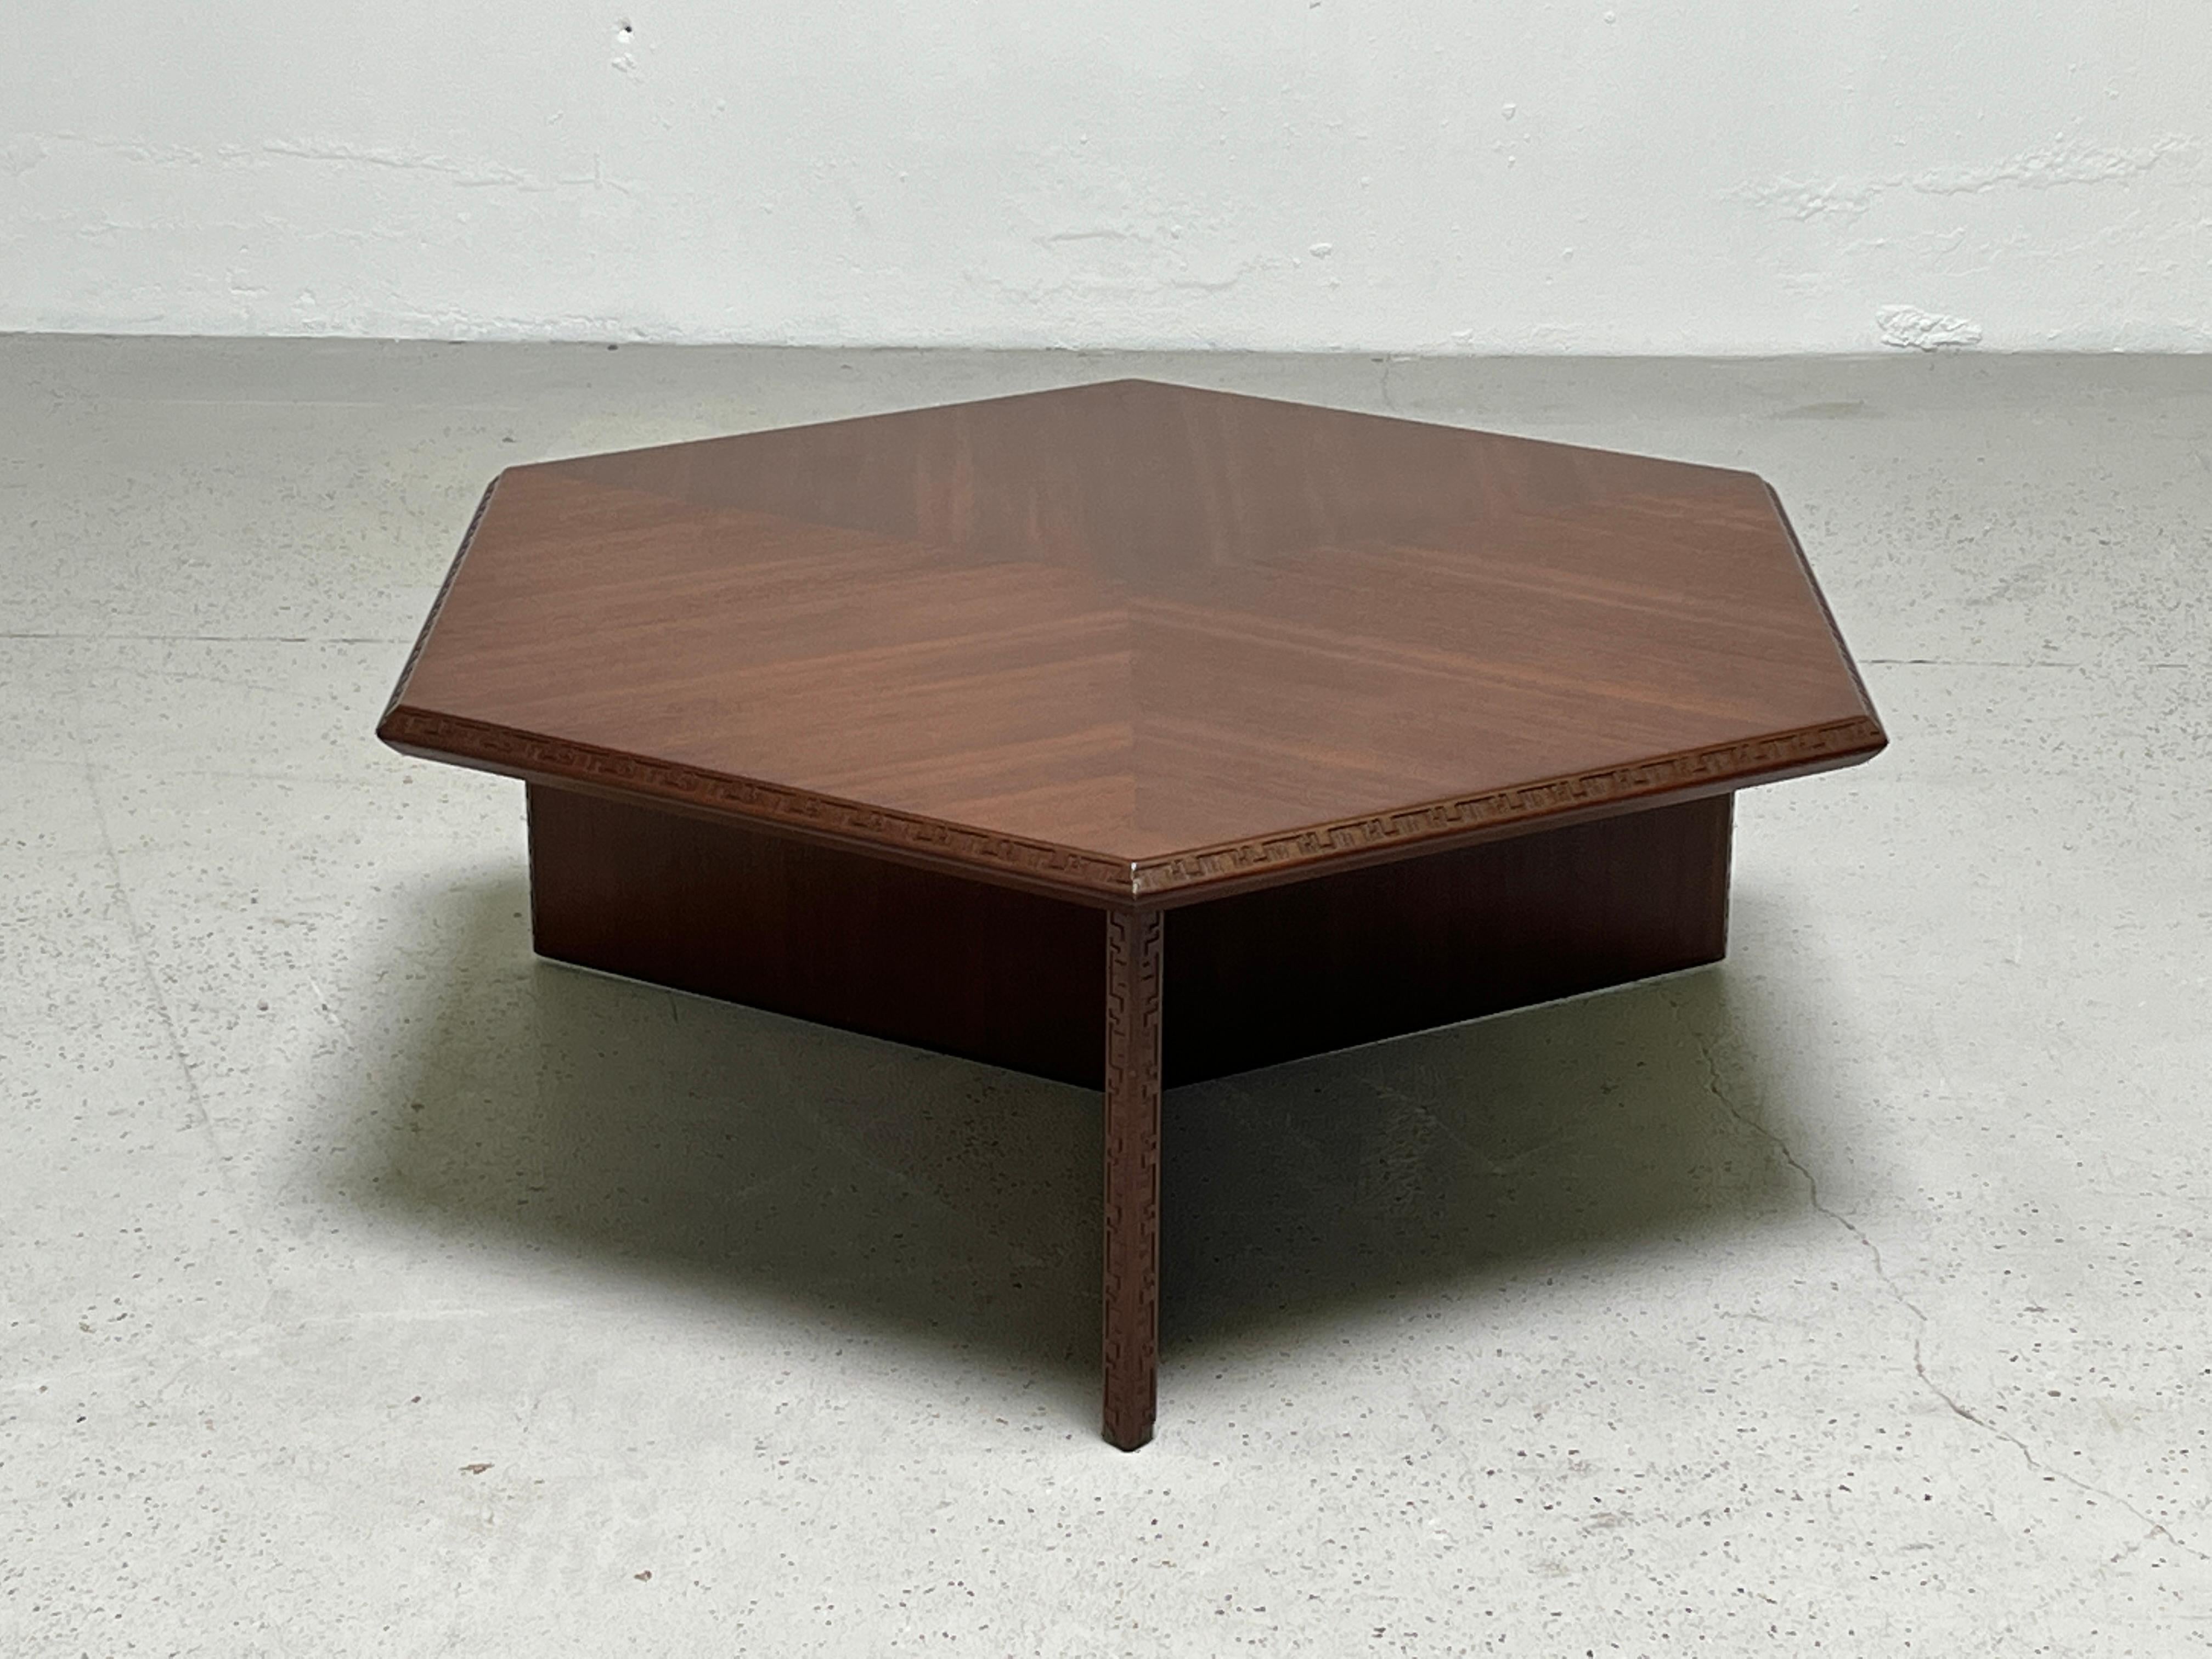 A mahogany hexagonal coffee table designed by Frank Lloyd Wright for Henredon.